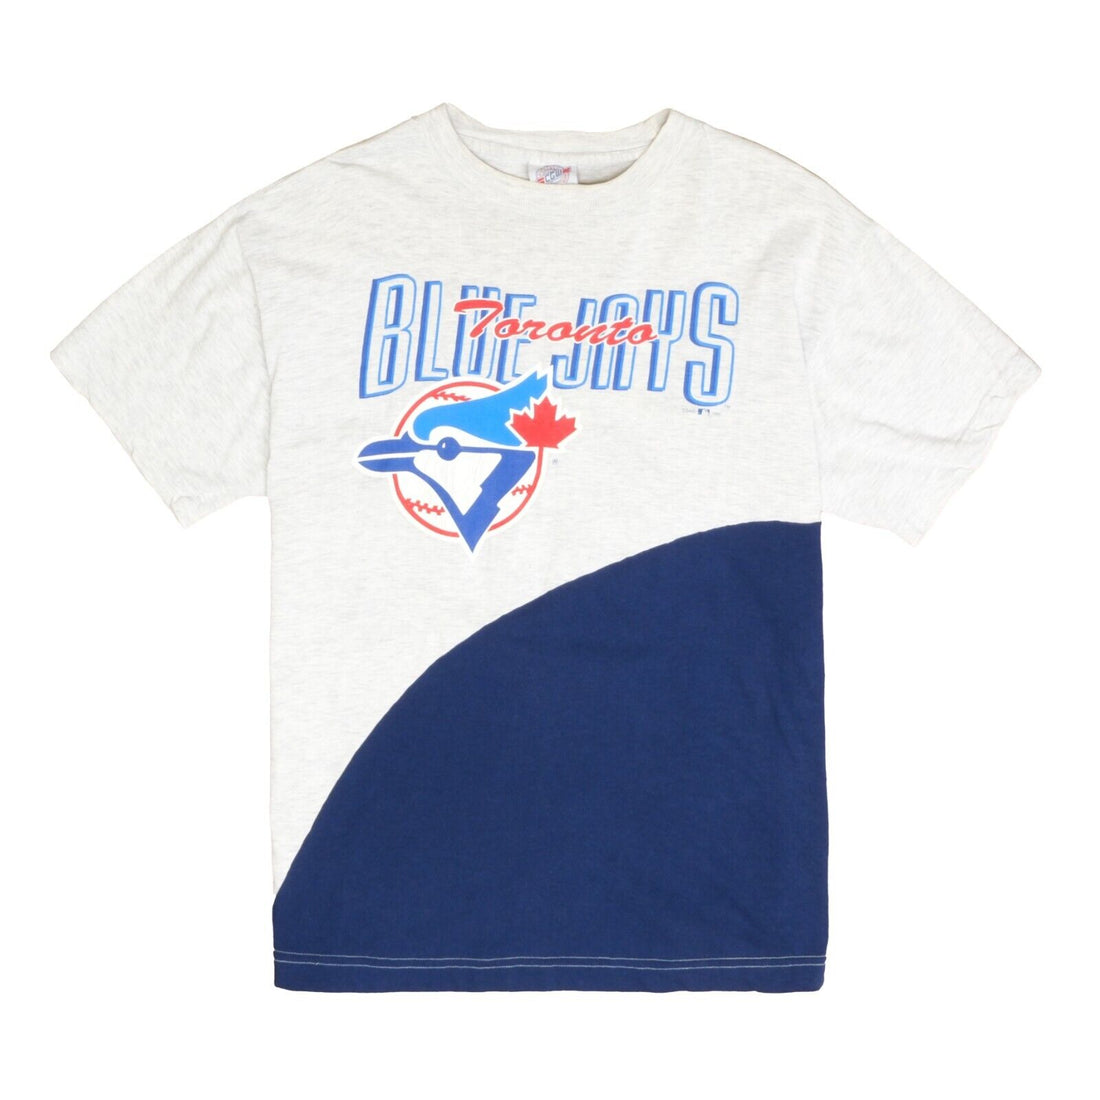 Vintage Toronto Blue Jays T-Shirt Size Medium Two Tone 1995 90s MLB